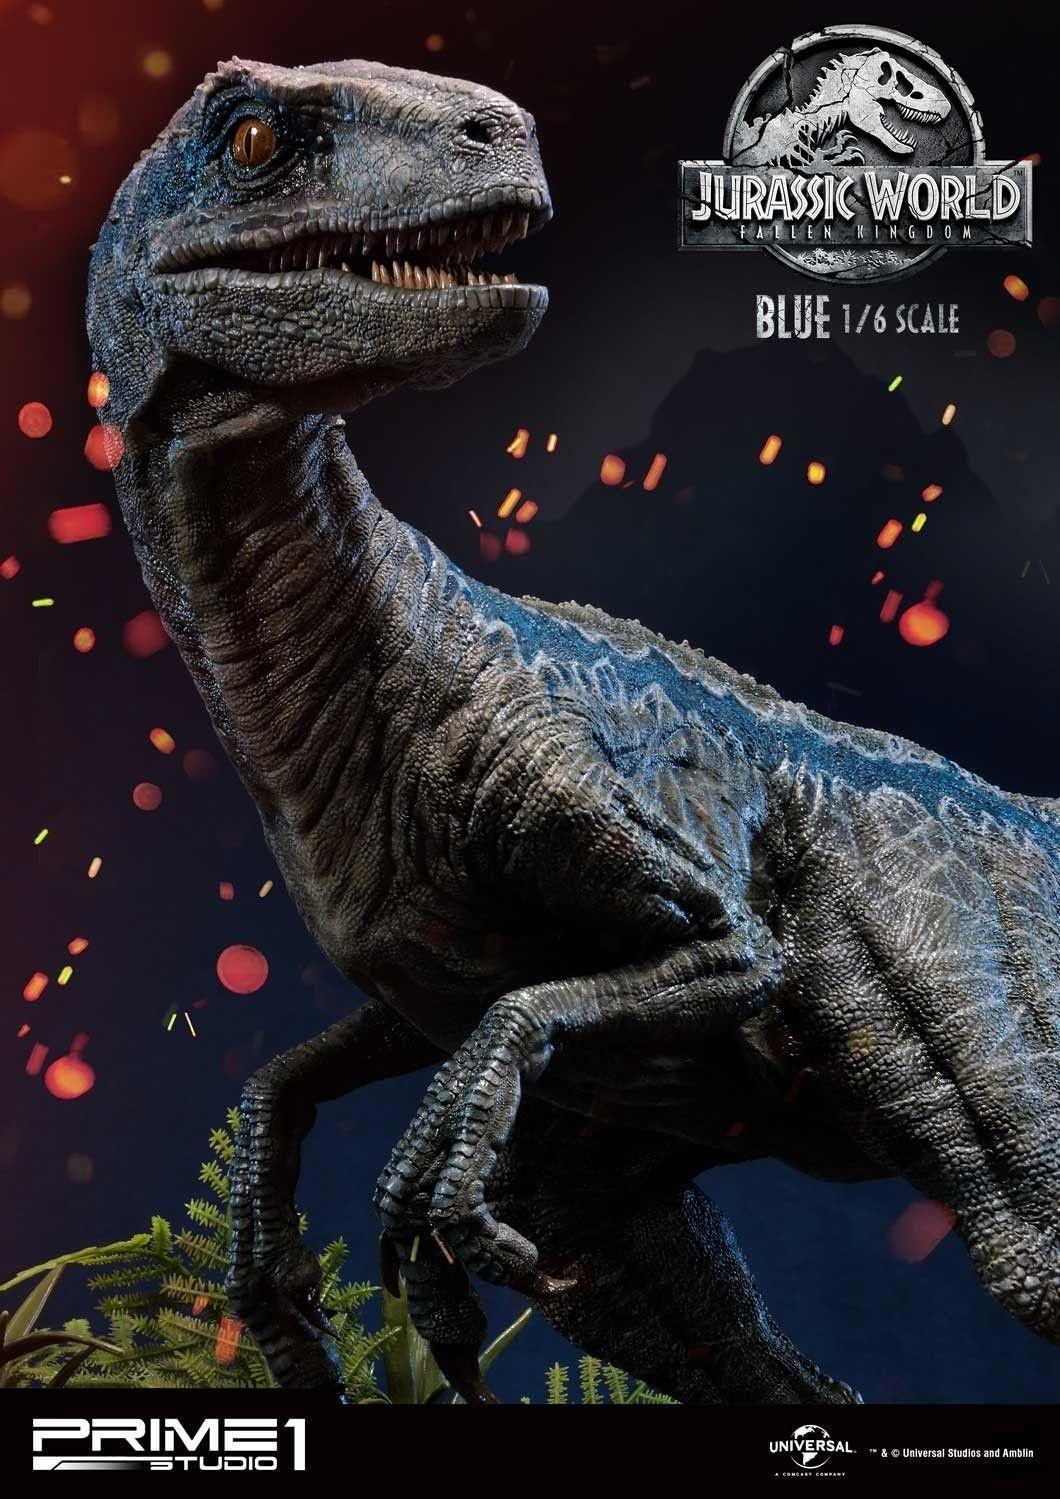 Jurassic World. Jurassic world wallpaper, Blue jurassic world, Jurassic world